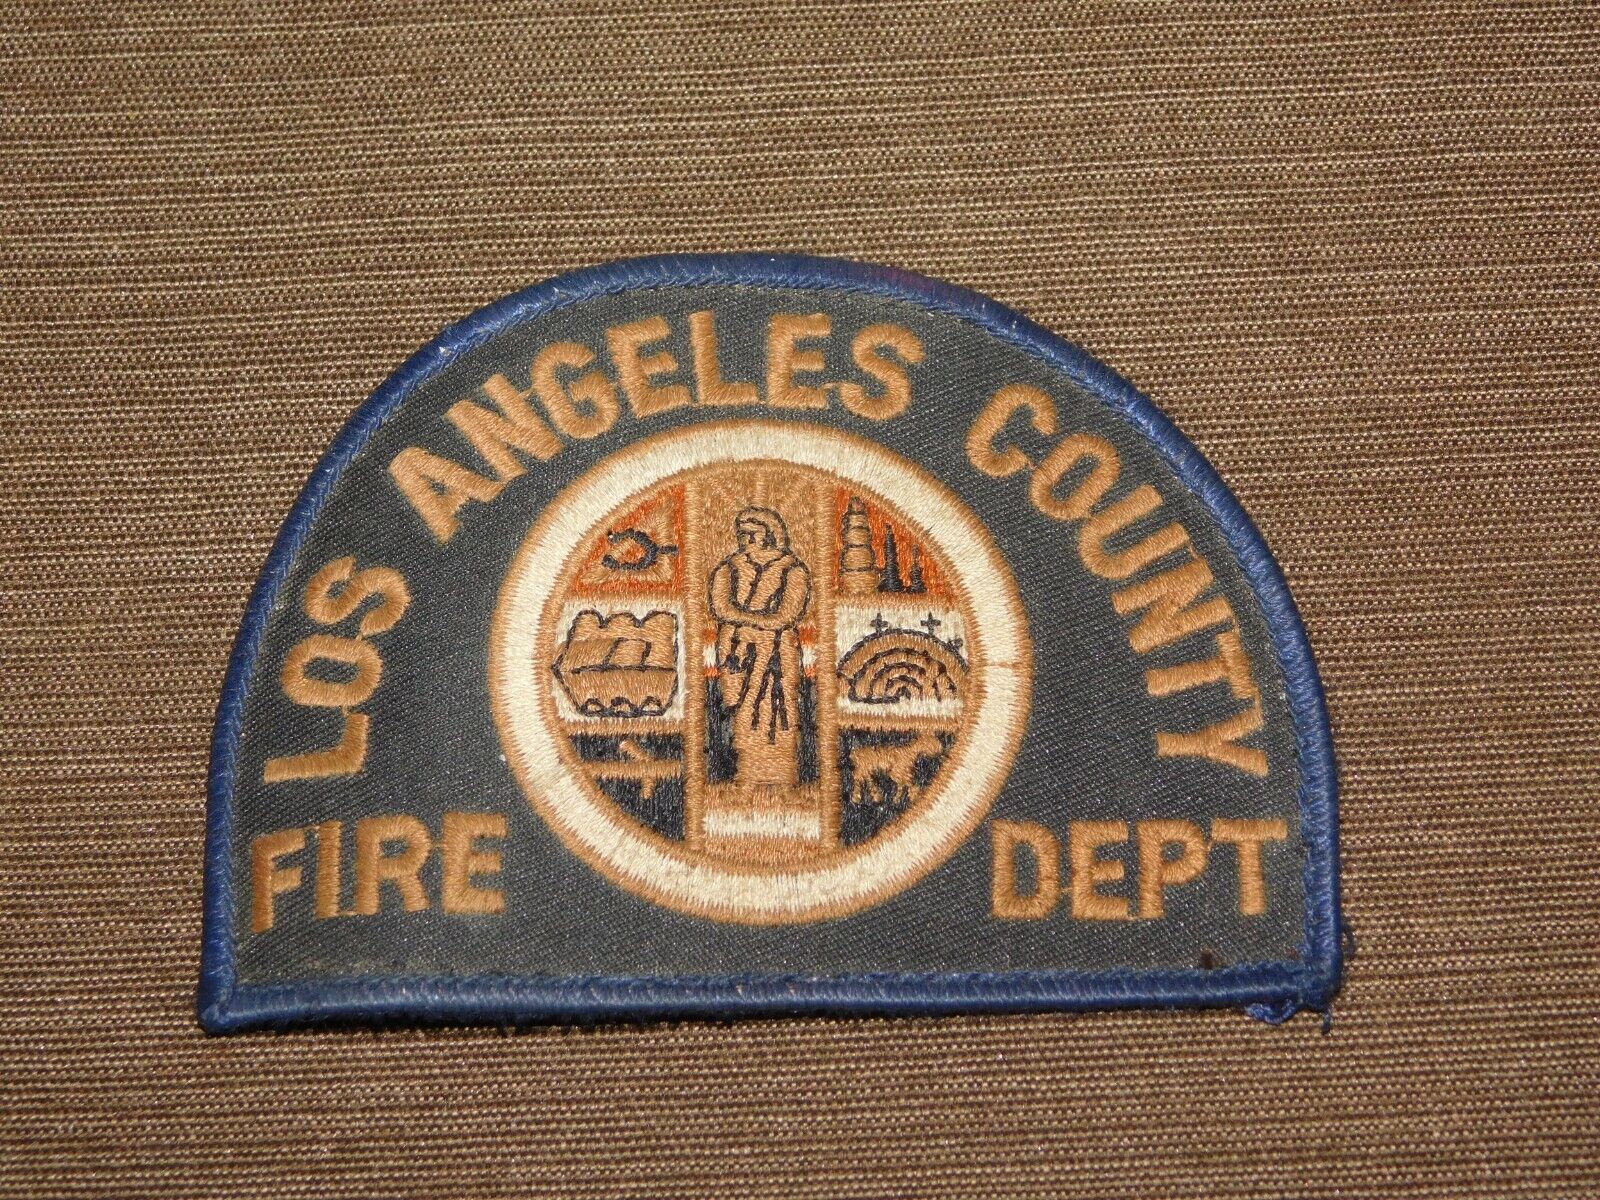 VINTAGE  LOS ANGELES COUNTY FIRE DEPT  FIREMEN\'S OBSOLETE PATCH